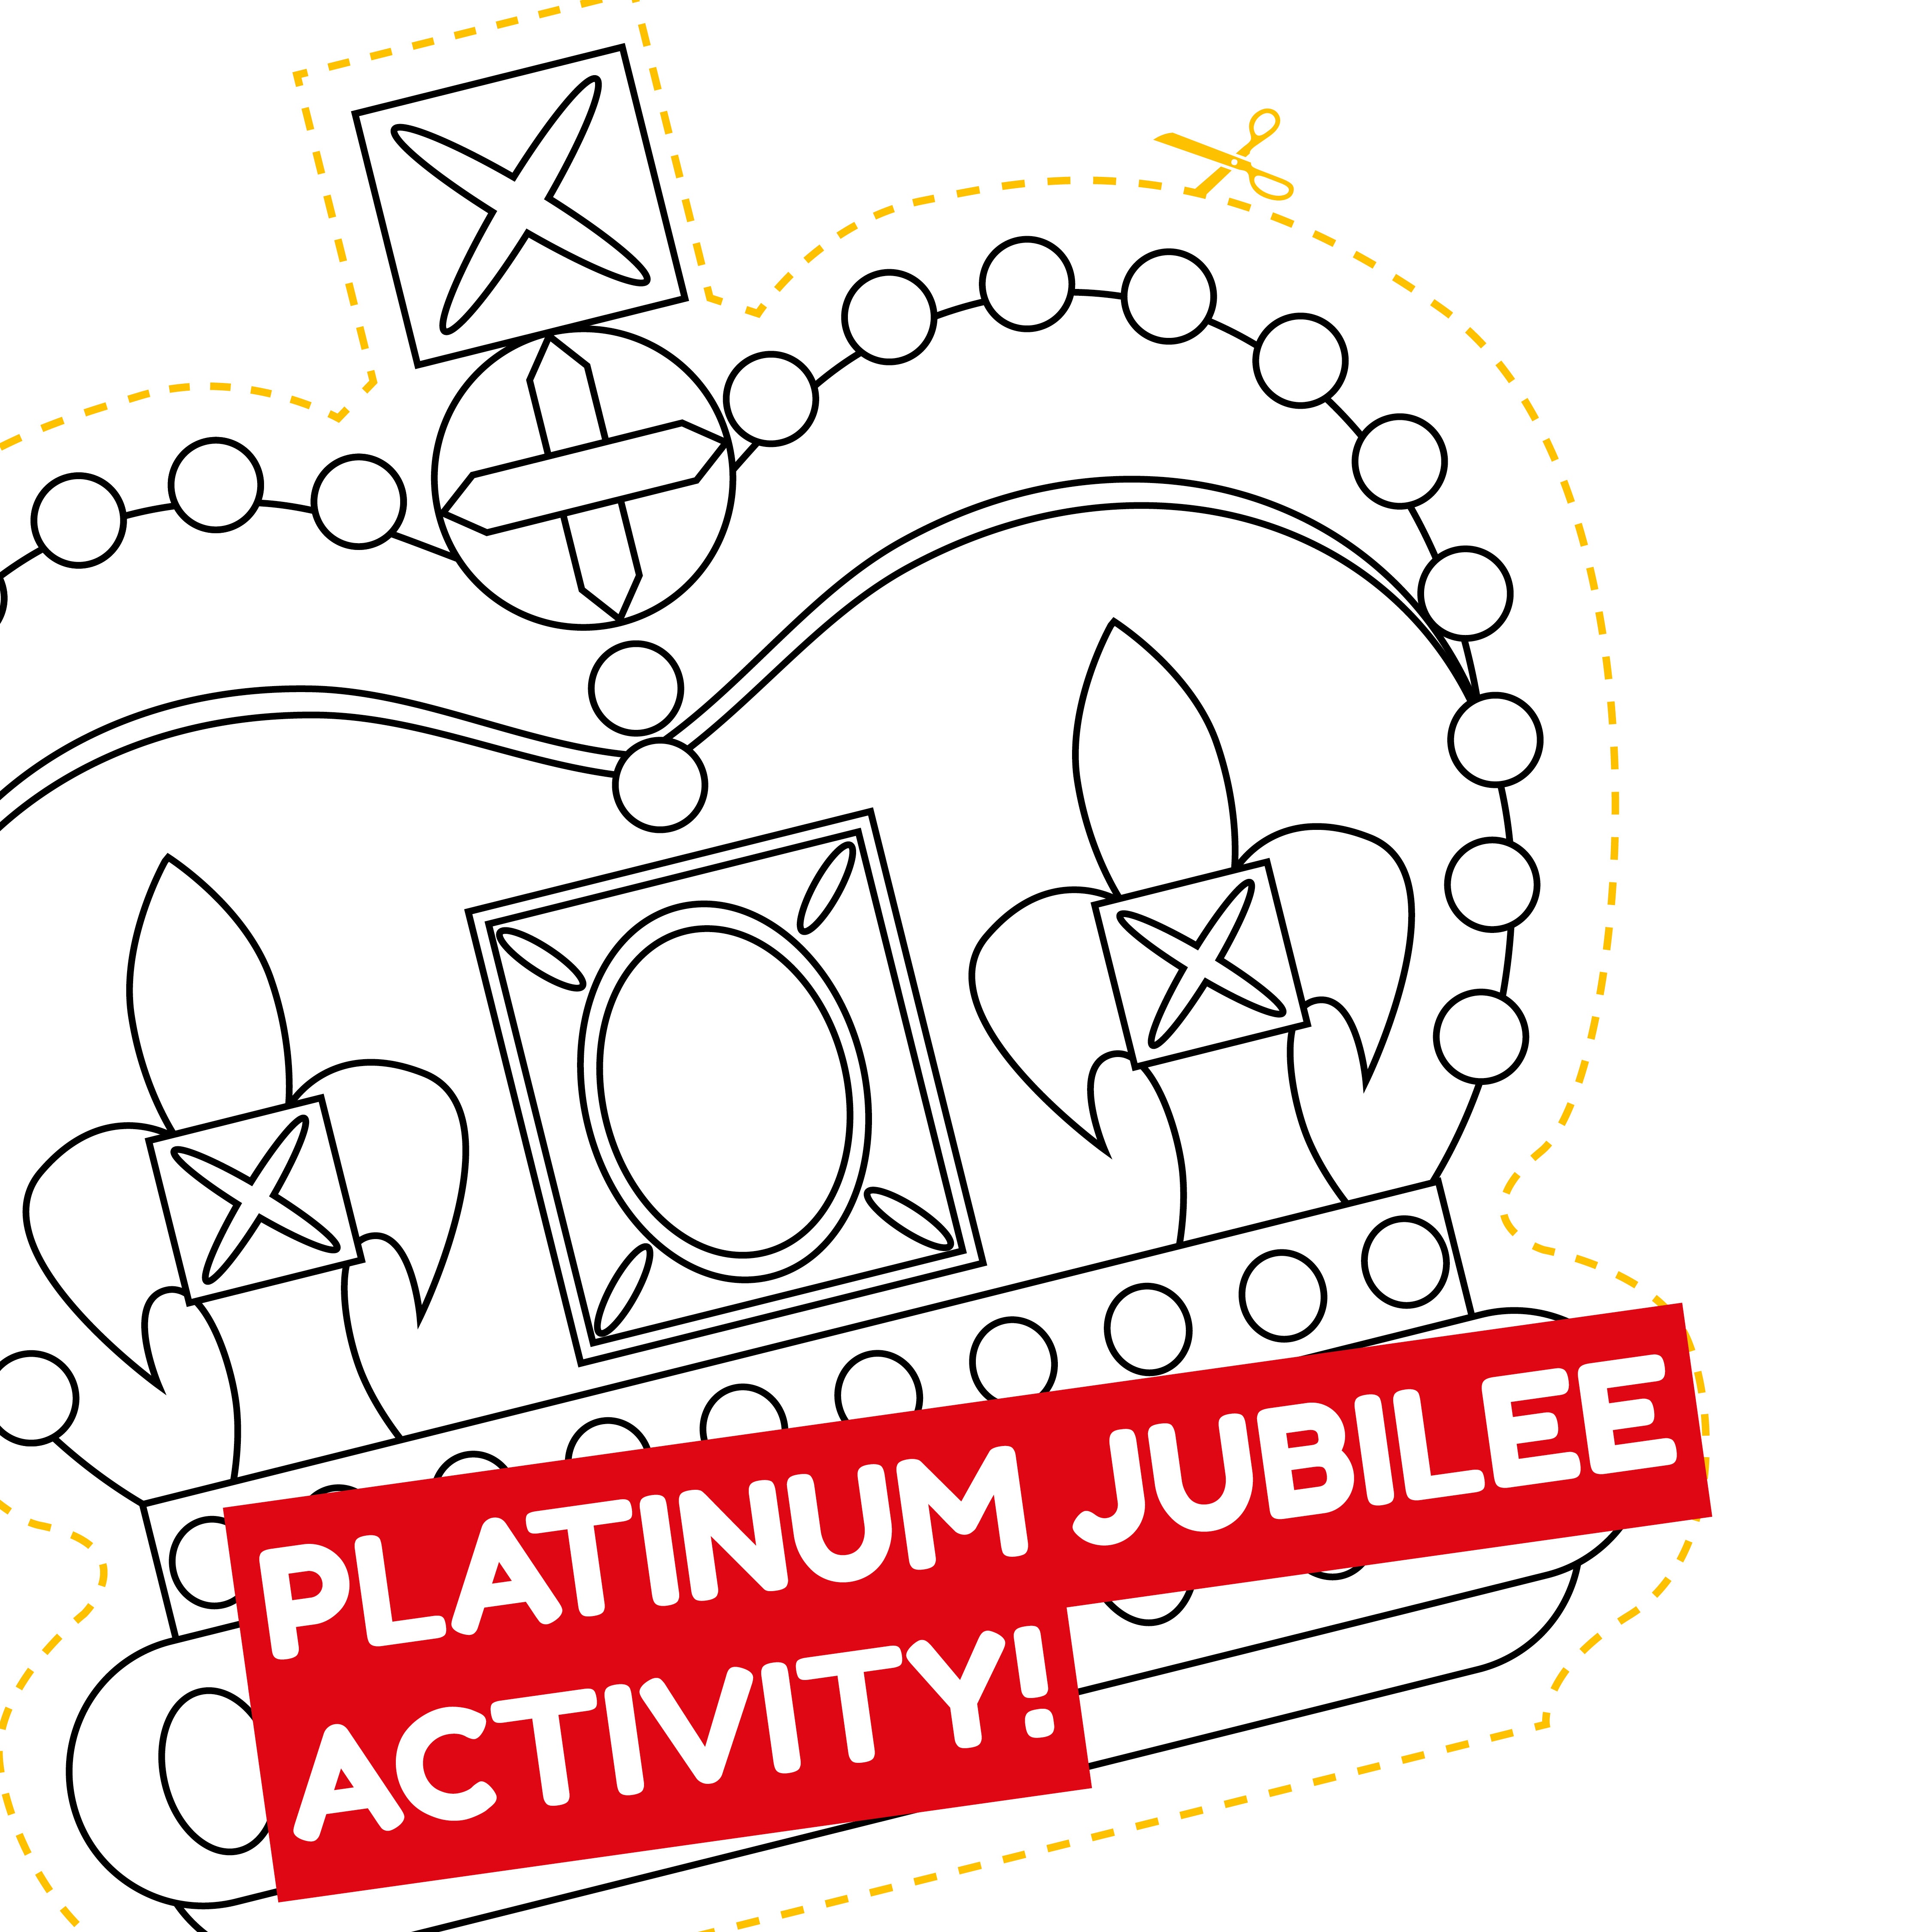 Platinum Jubilee Activity